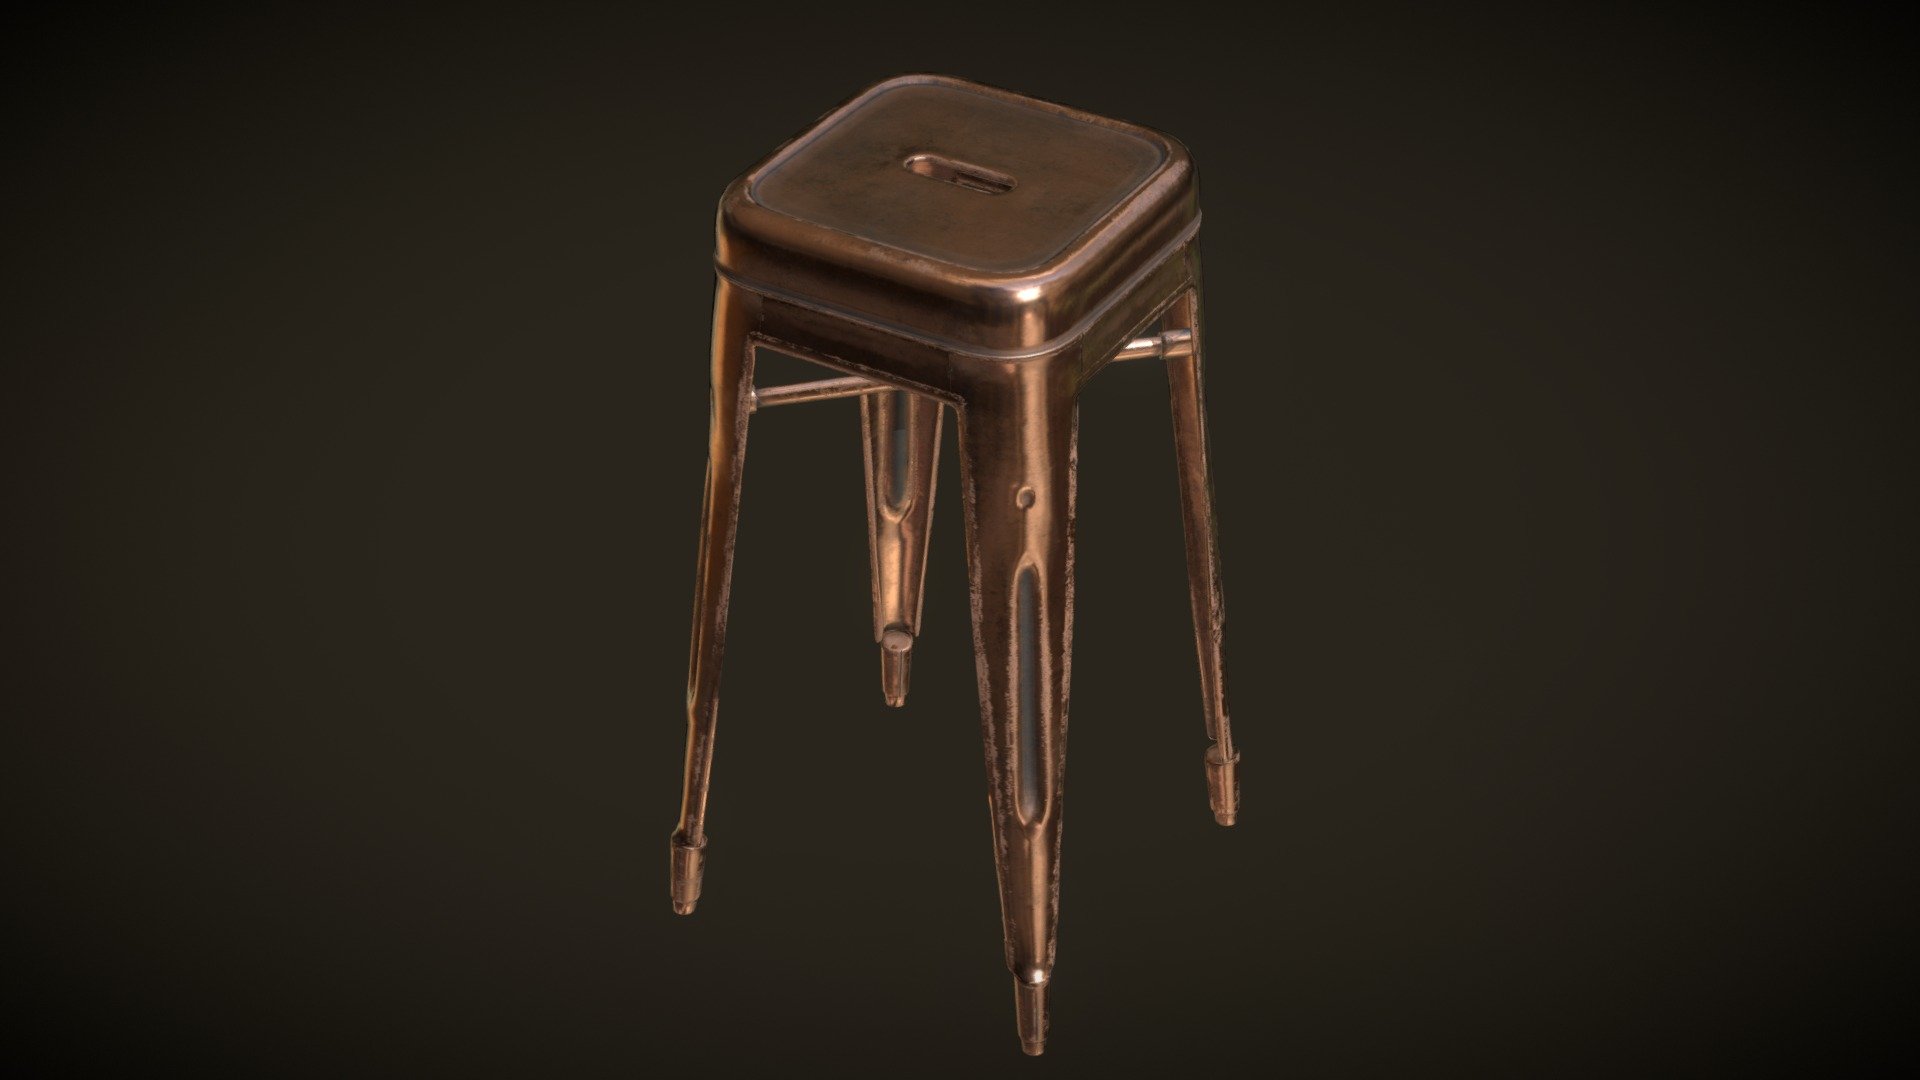 A non-official copper stool, based on Tolix's design! 
Made using C4D, Substance Painter - Tolix Stool - 3D model by Stefan E (@stefevr) 3d model